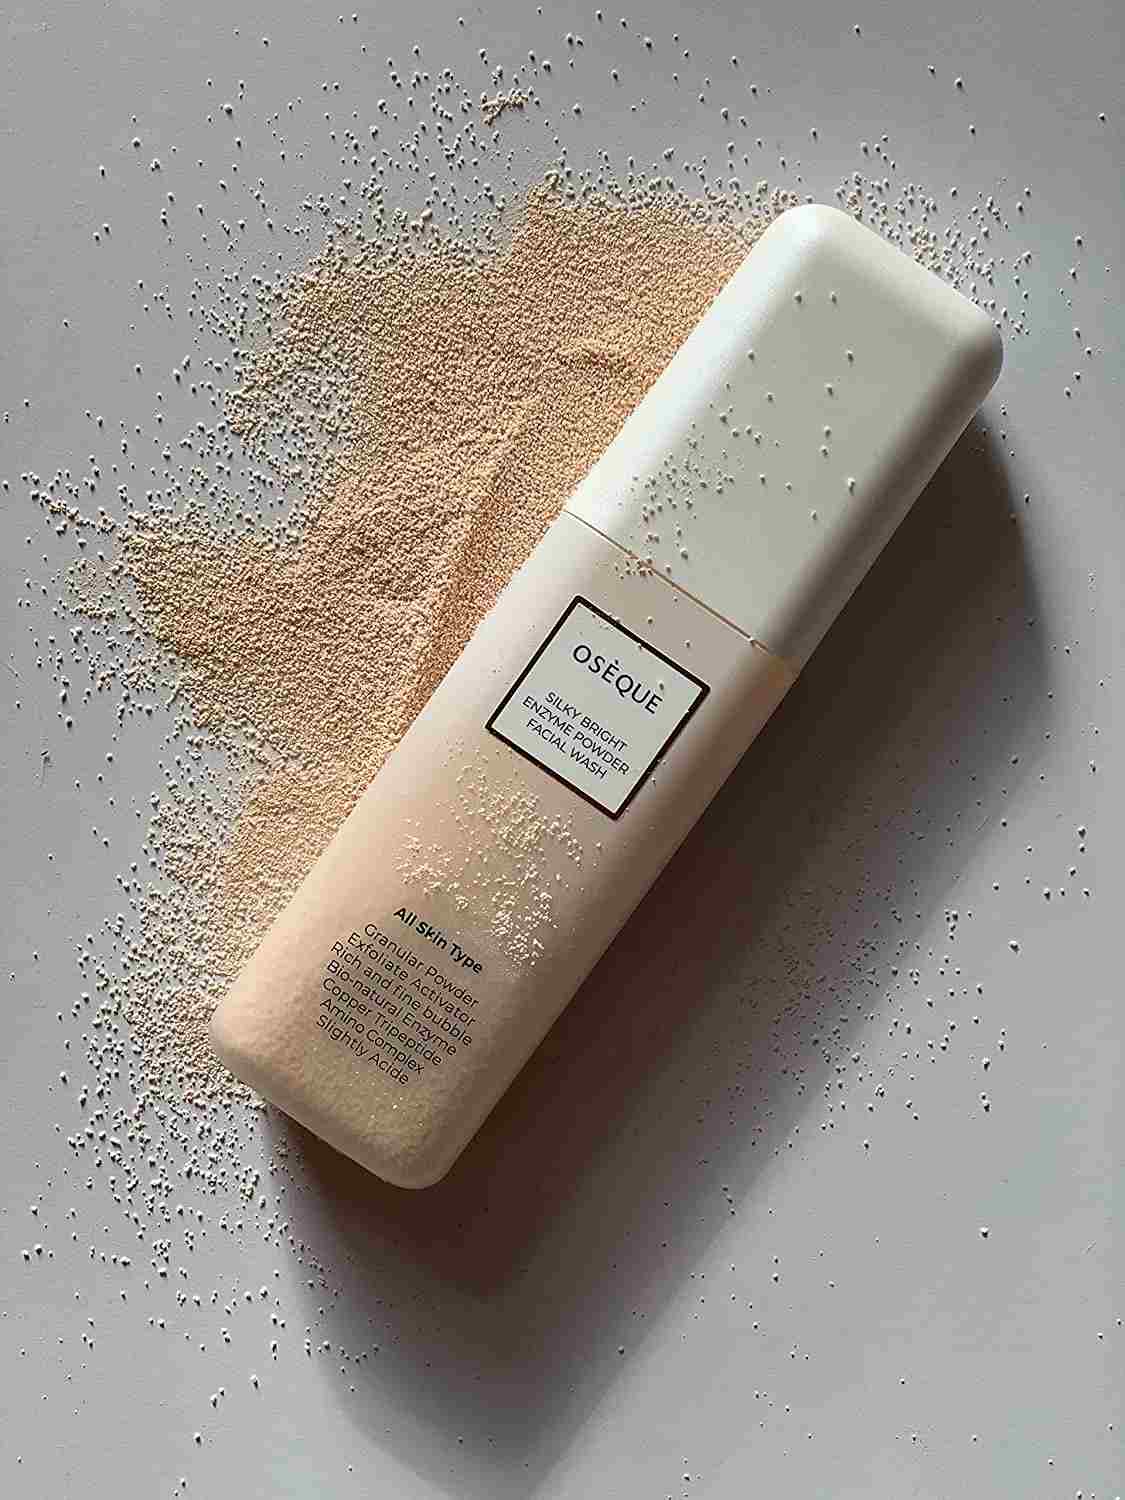 Oseque Silky Bright Enzyme Powder Facial Wash (50g) photo 9